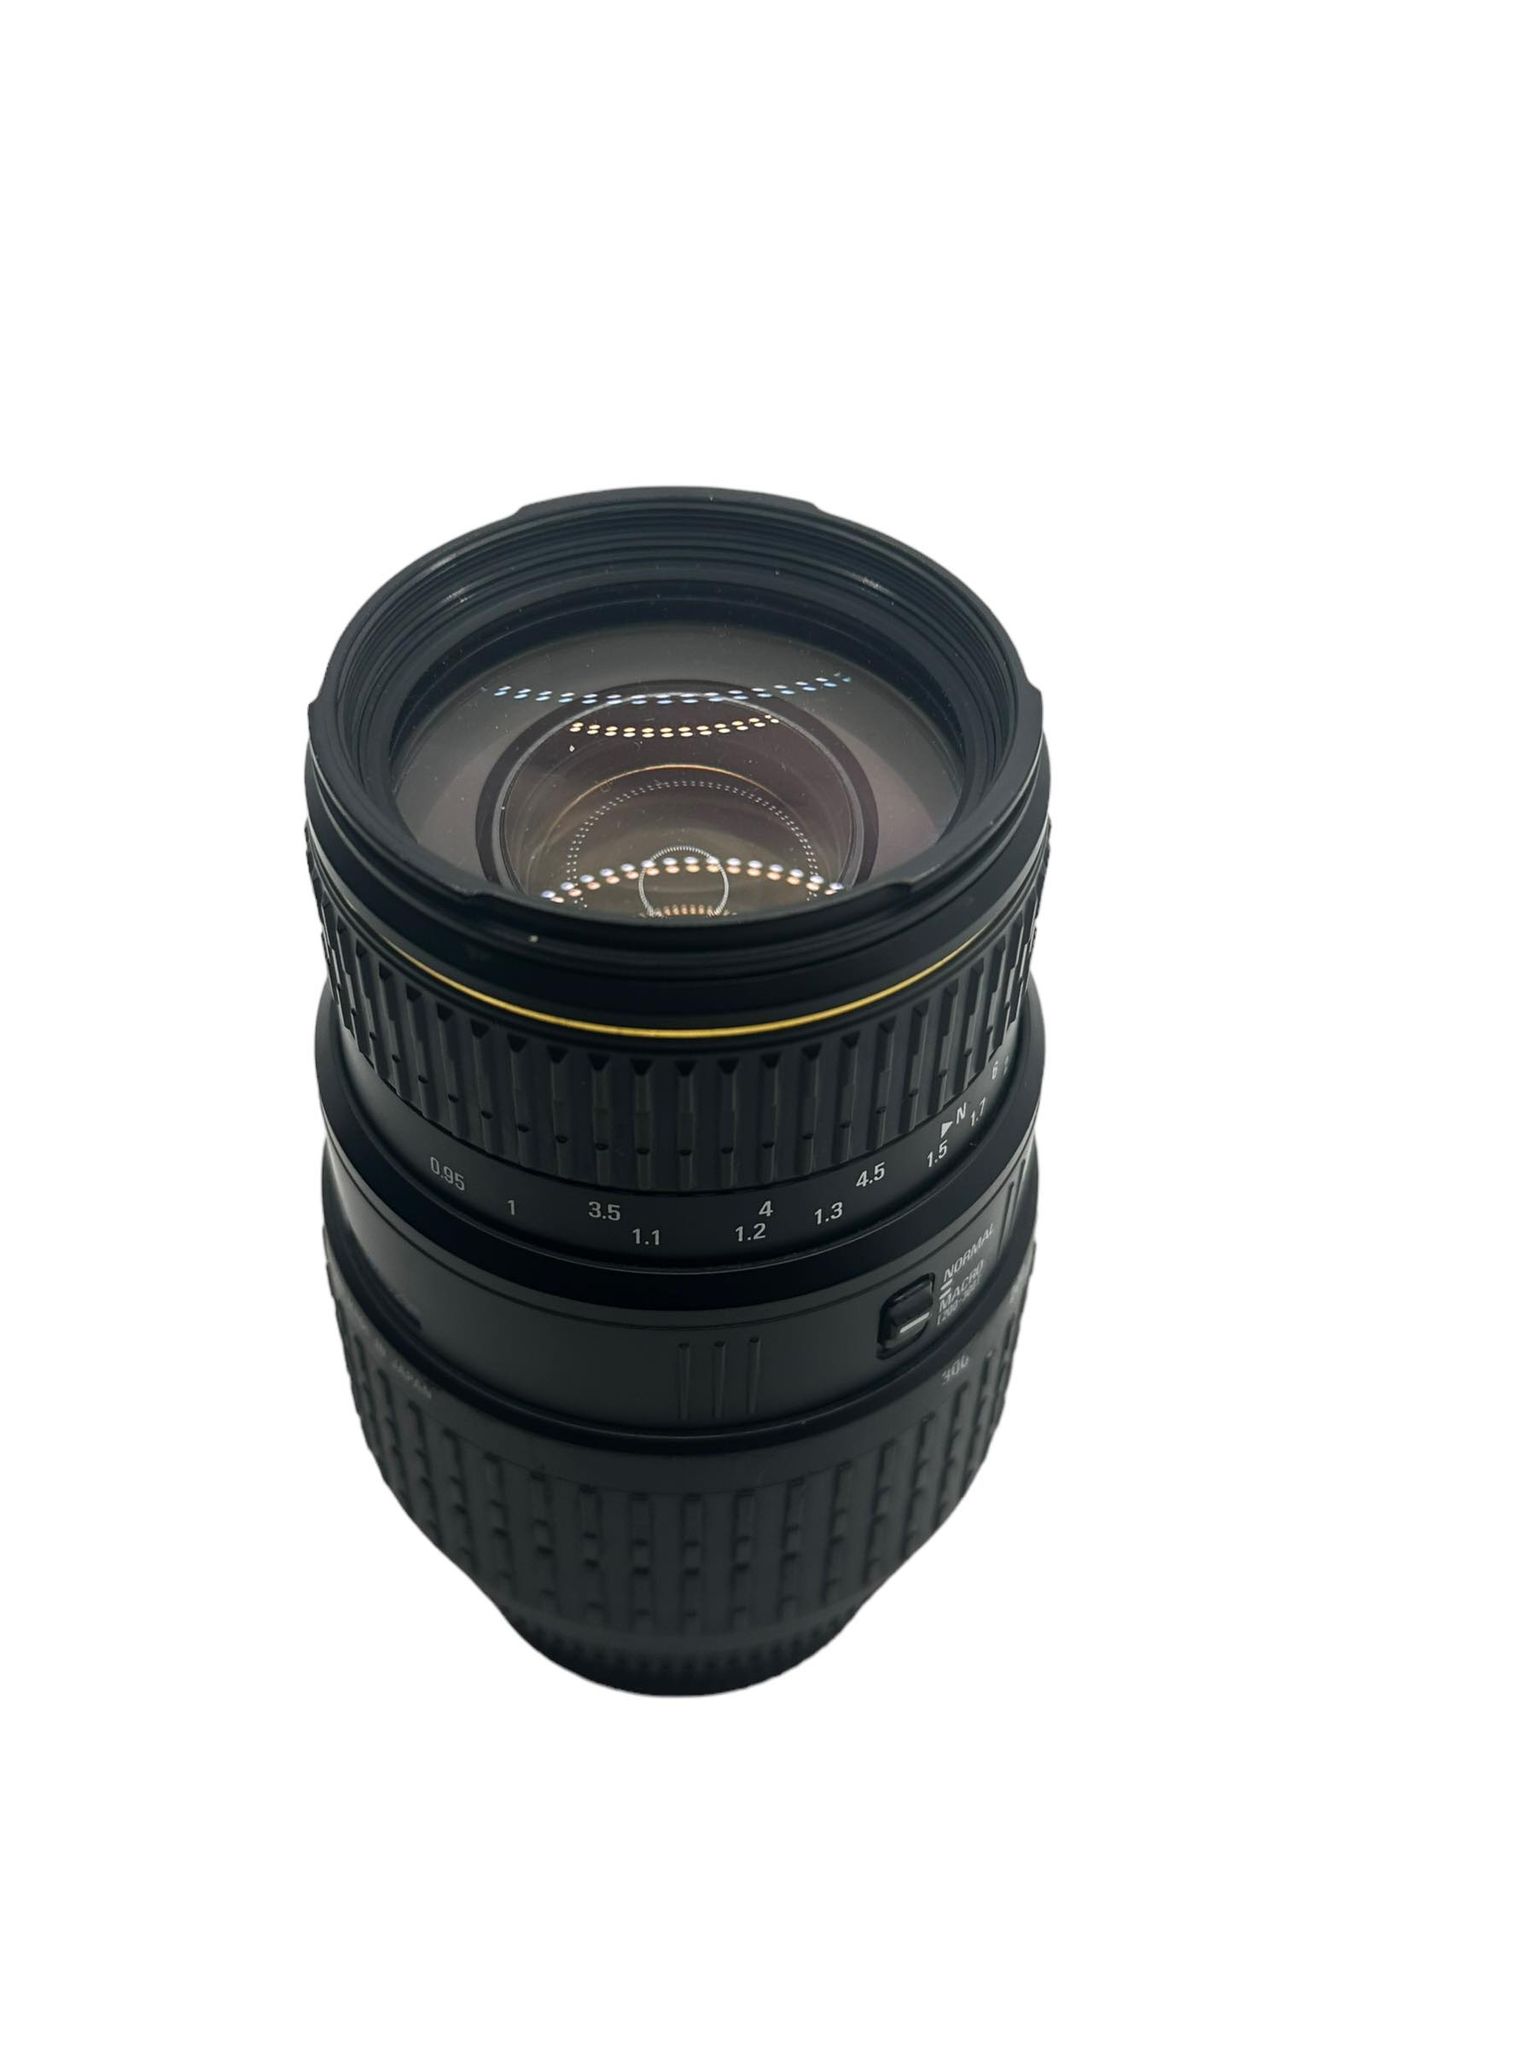 Nikon Lens 70-300mm Macro Super